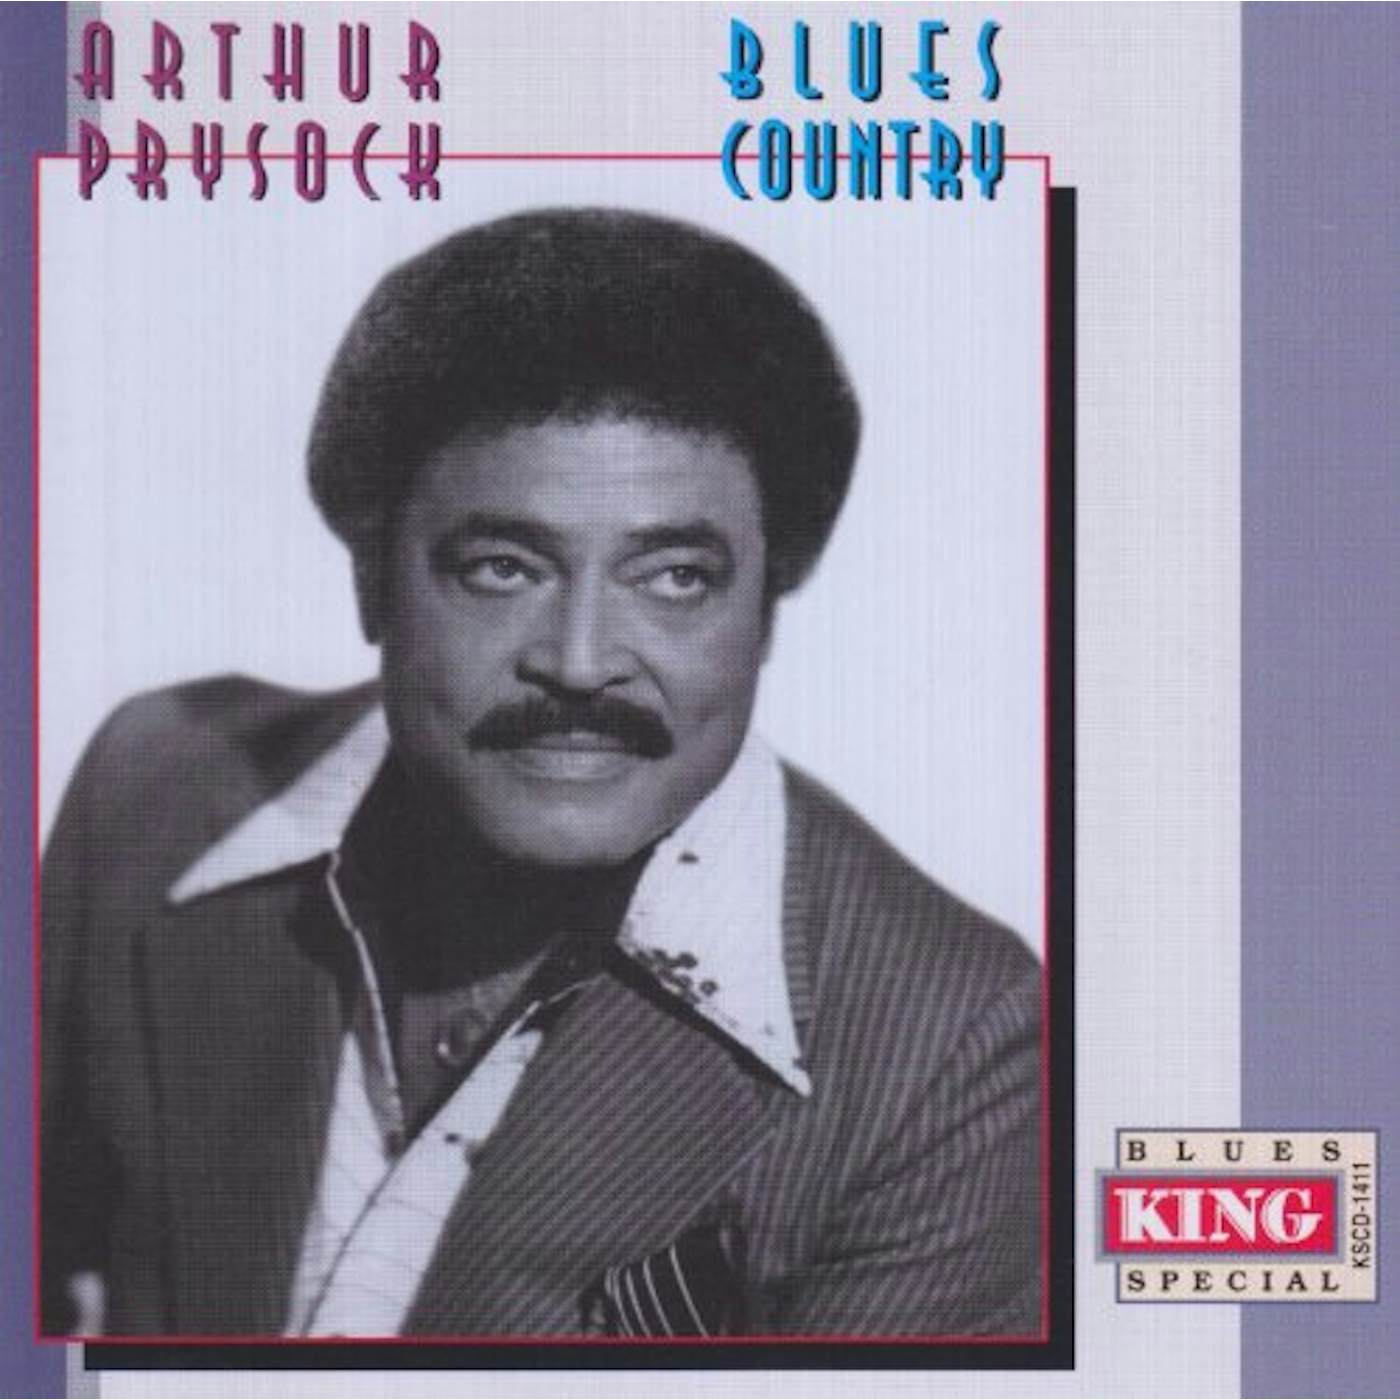 Arthur Prysock BLUES COUNTRY CD